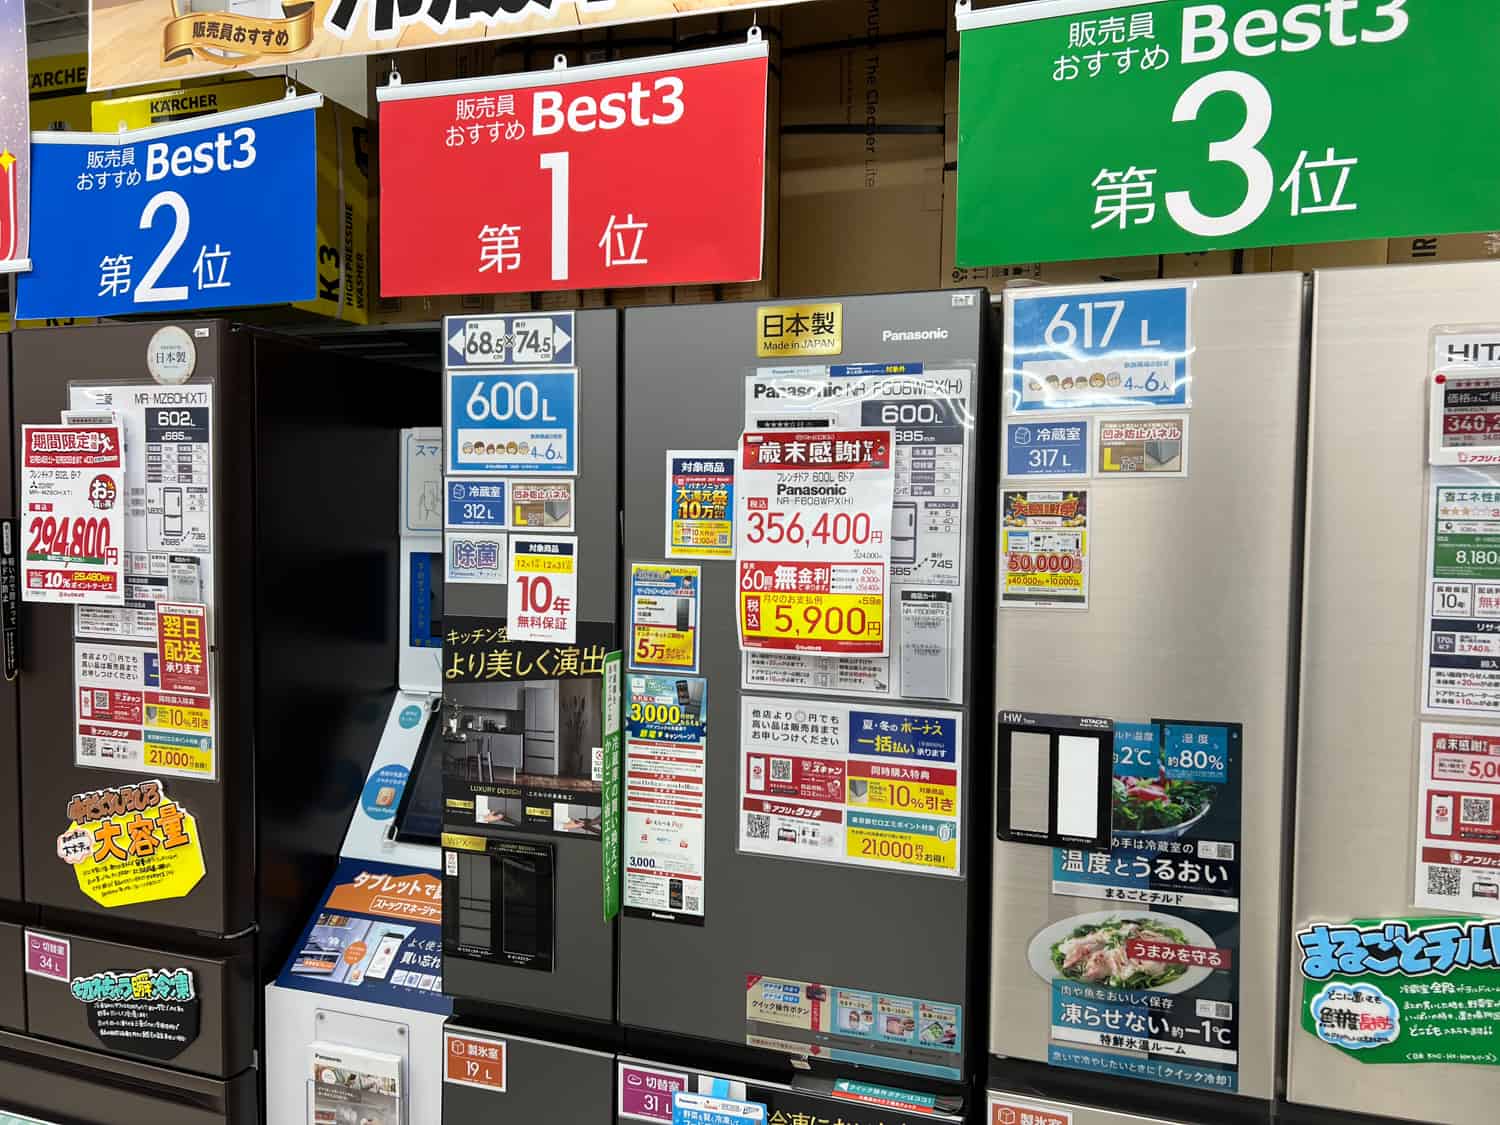 Japanese refrigerator brands